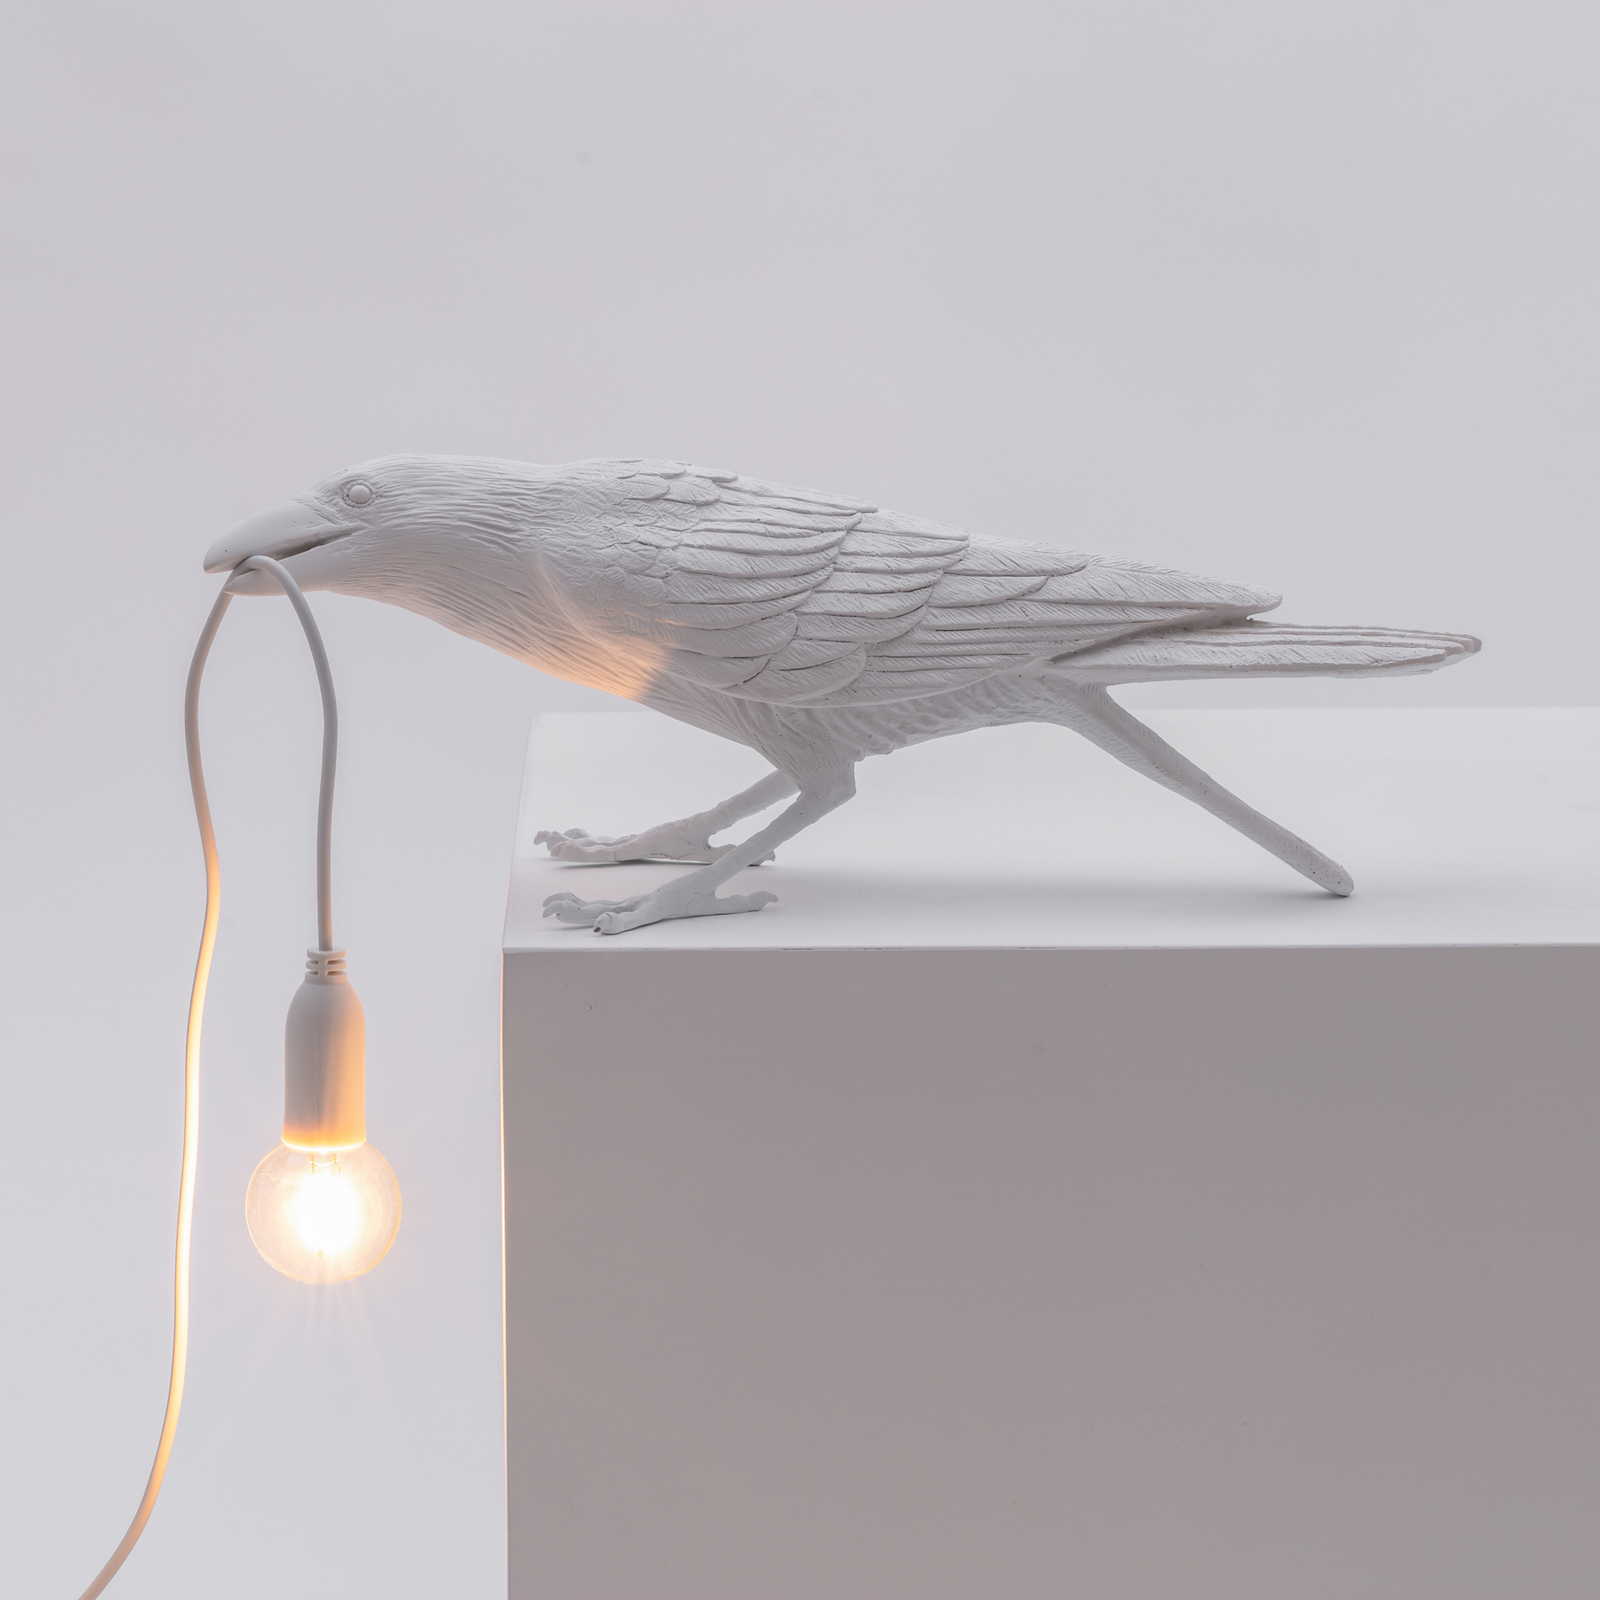 Bird Lamp deko LED-terrasselampe, legende, hvid